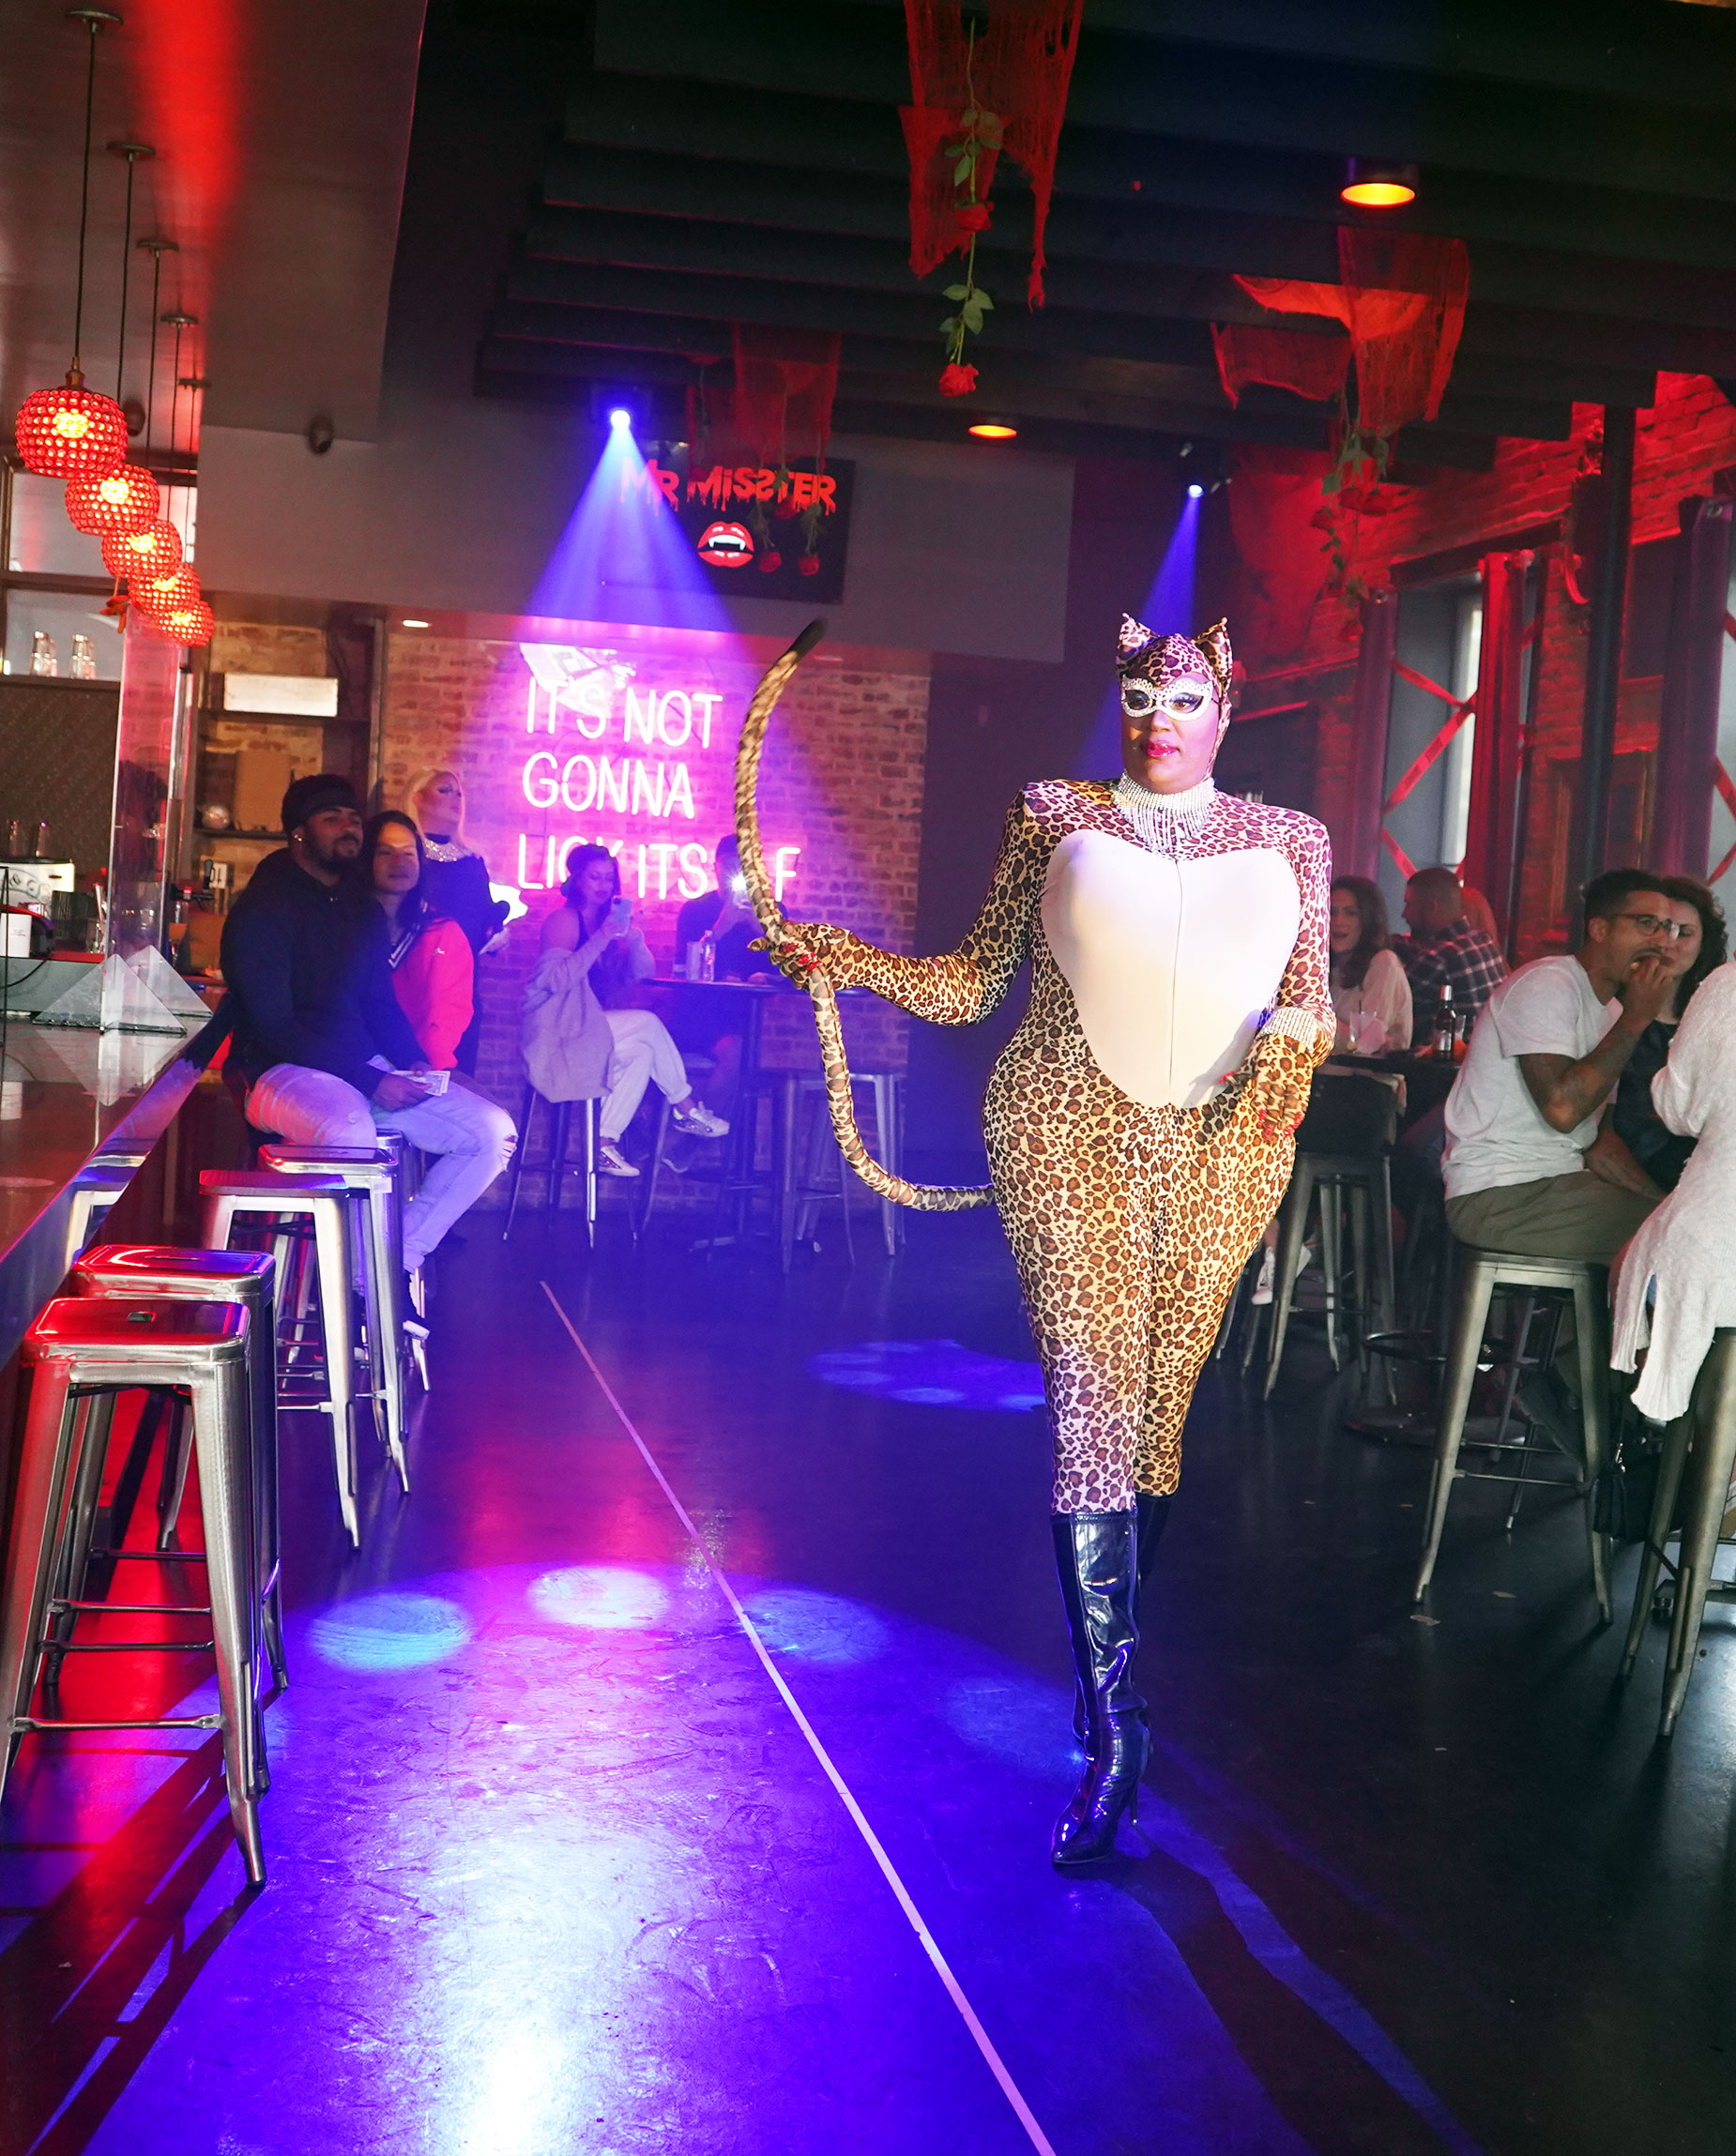 Dallas drag performer Onyx Anderson performing at Mr. Misster bar.